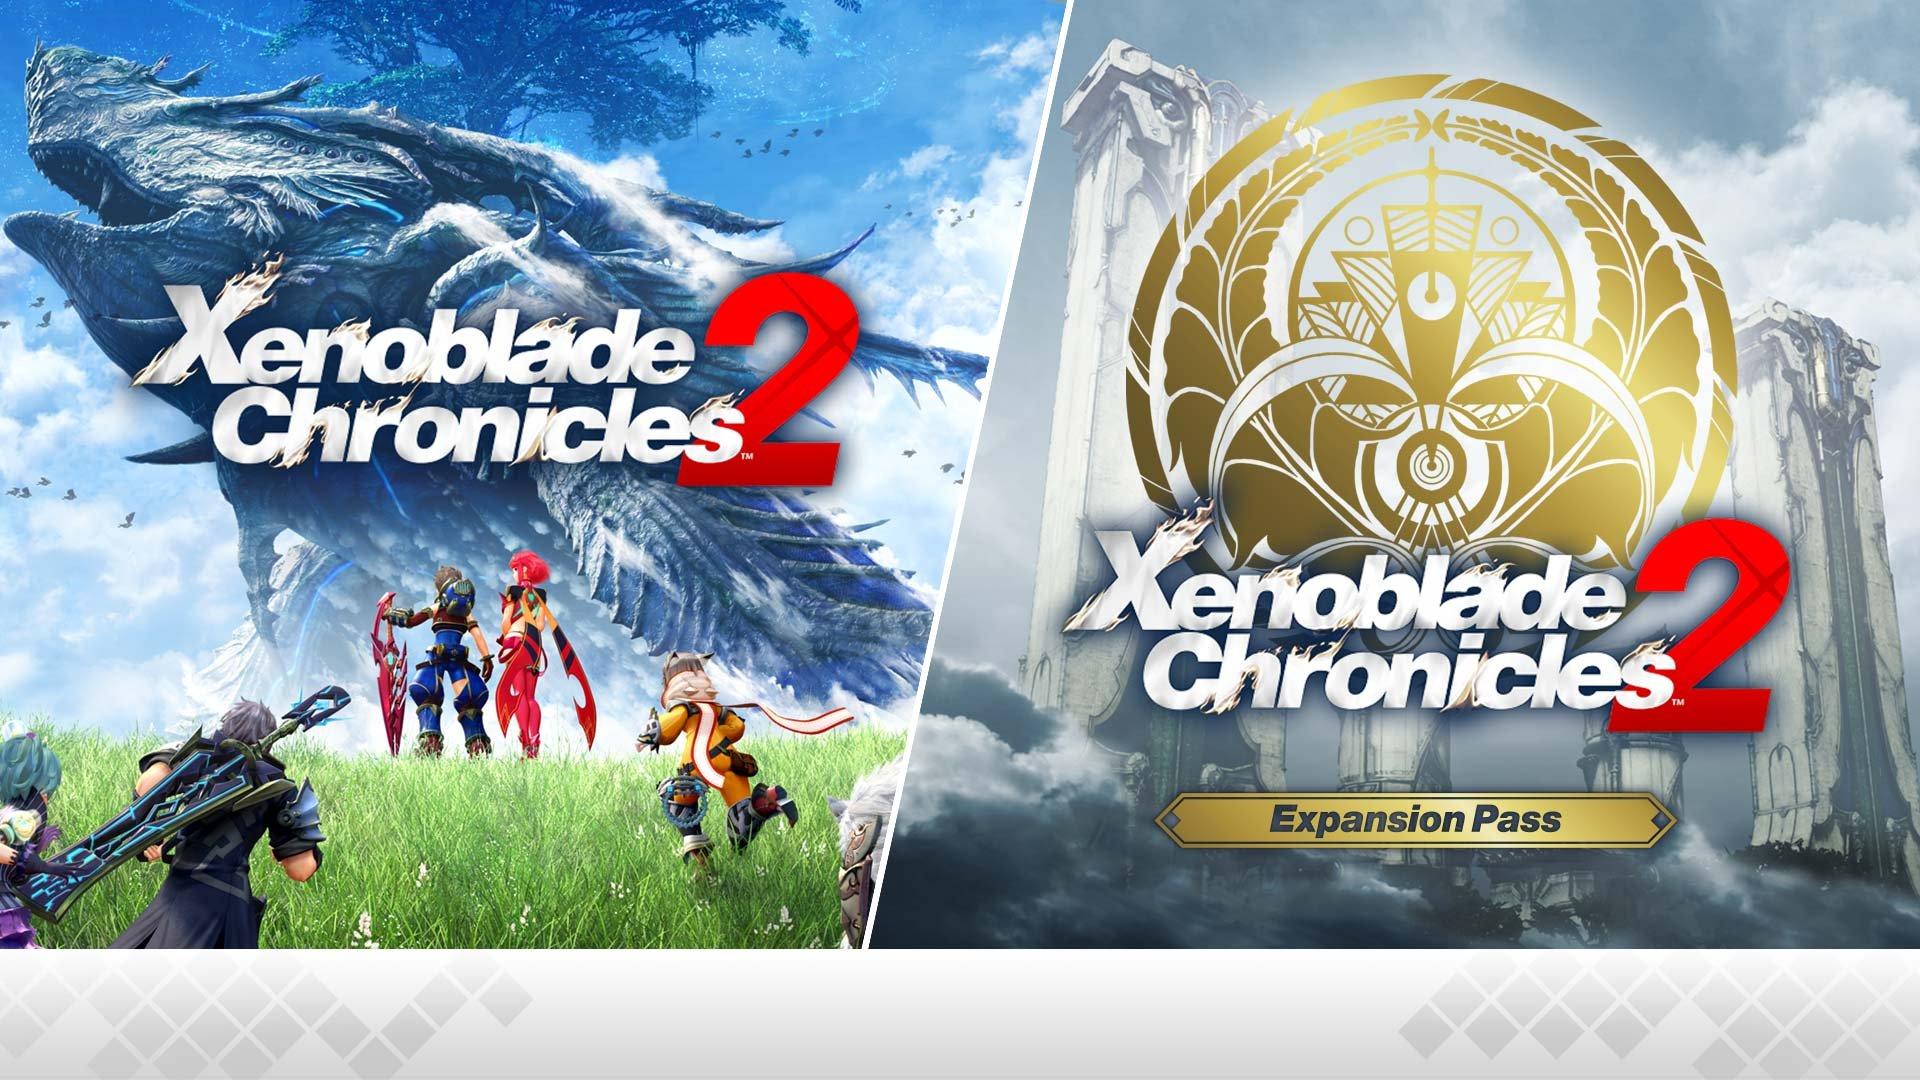 Xenoblade Chronicles 3, DLC & Expansion Pass